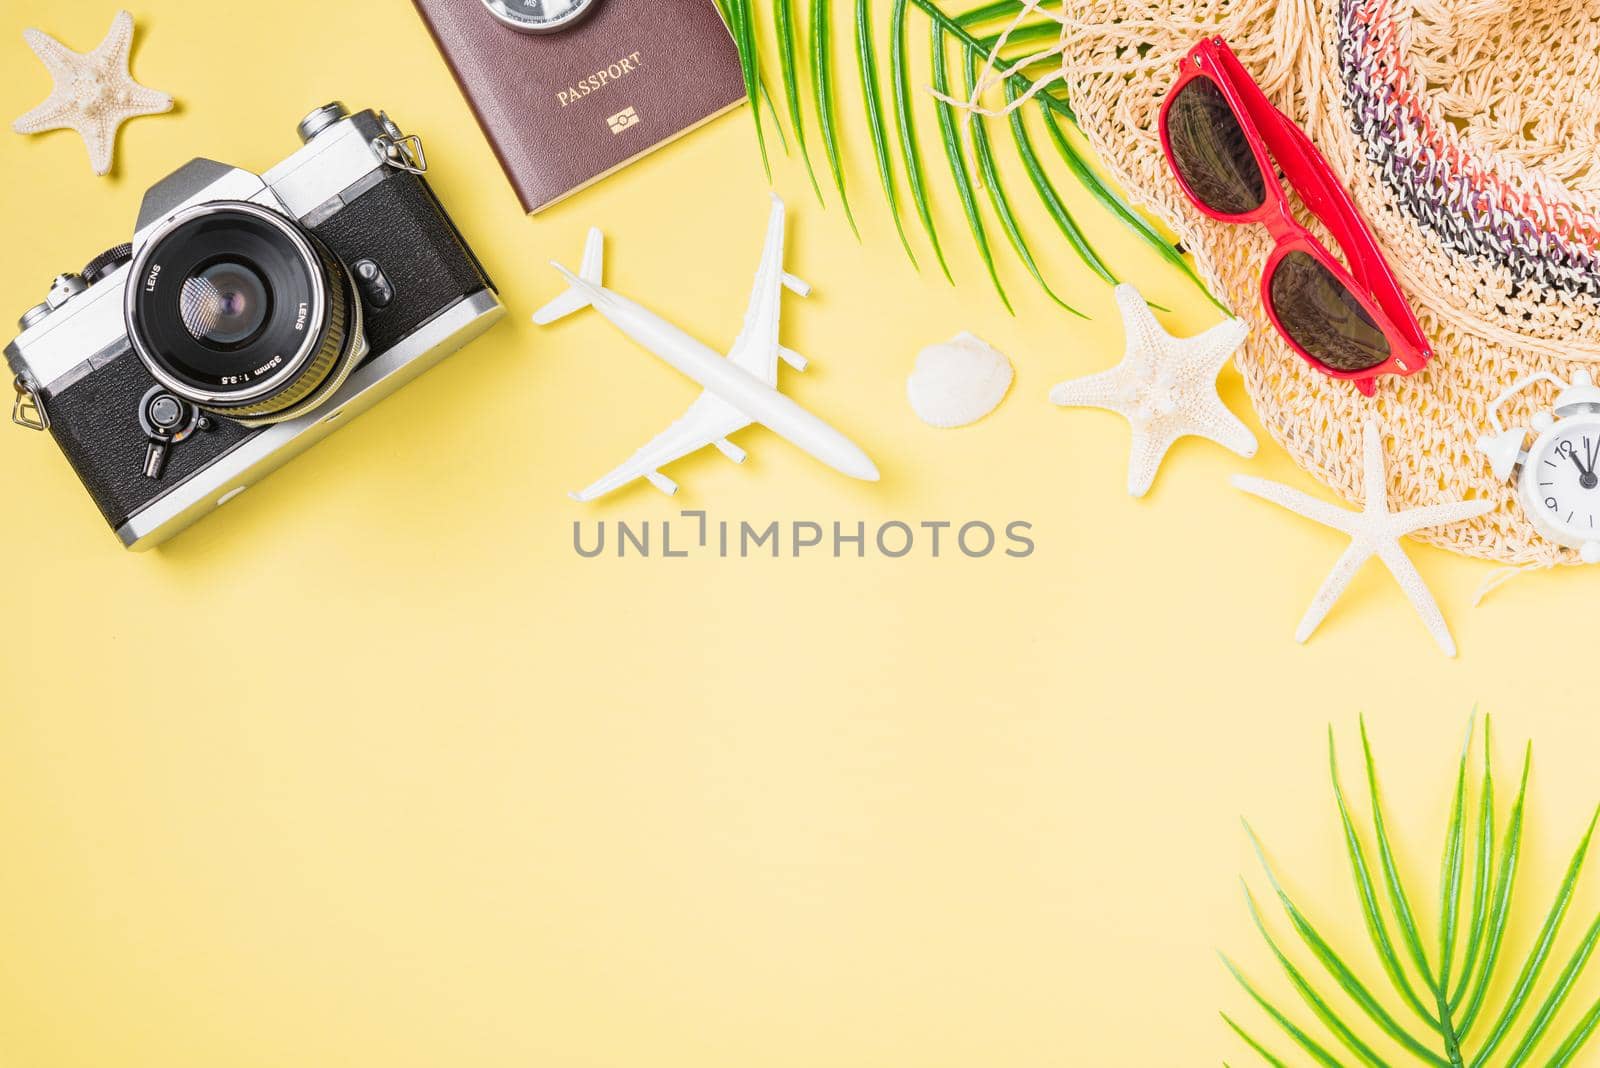 camera films, hat, airplane, starfish traveler tropical beach accessories by Sorapop